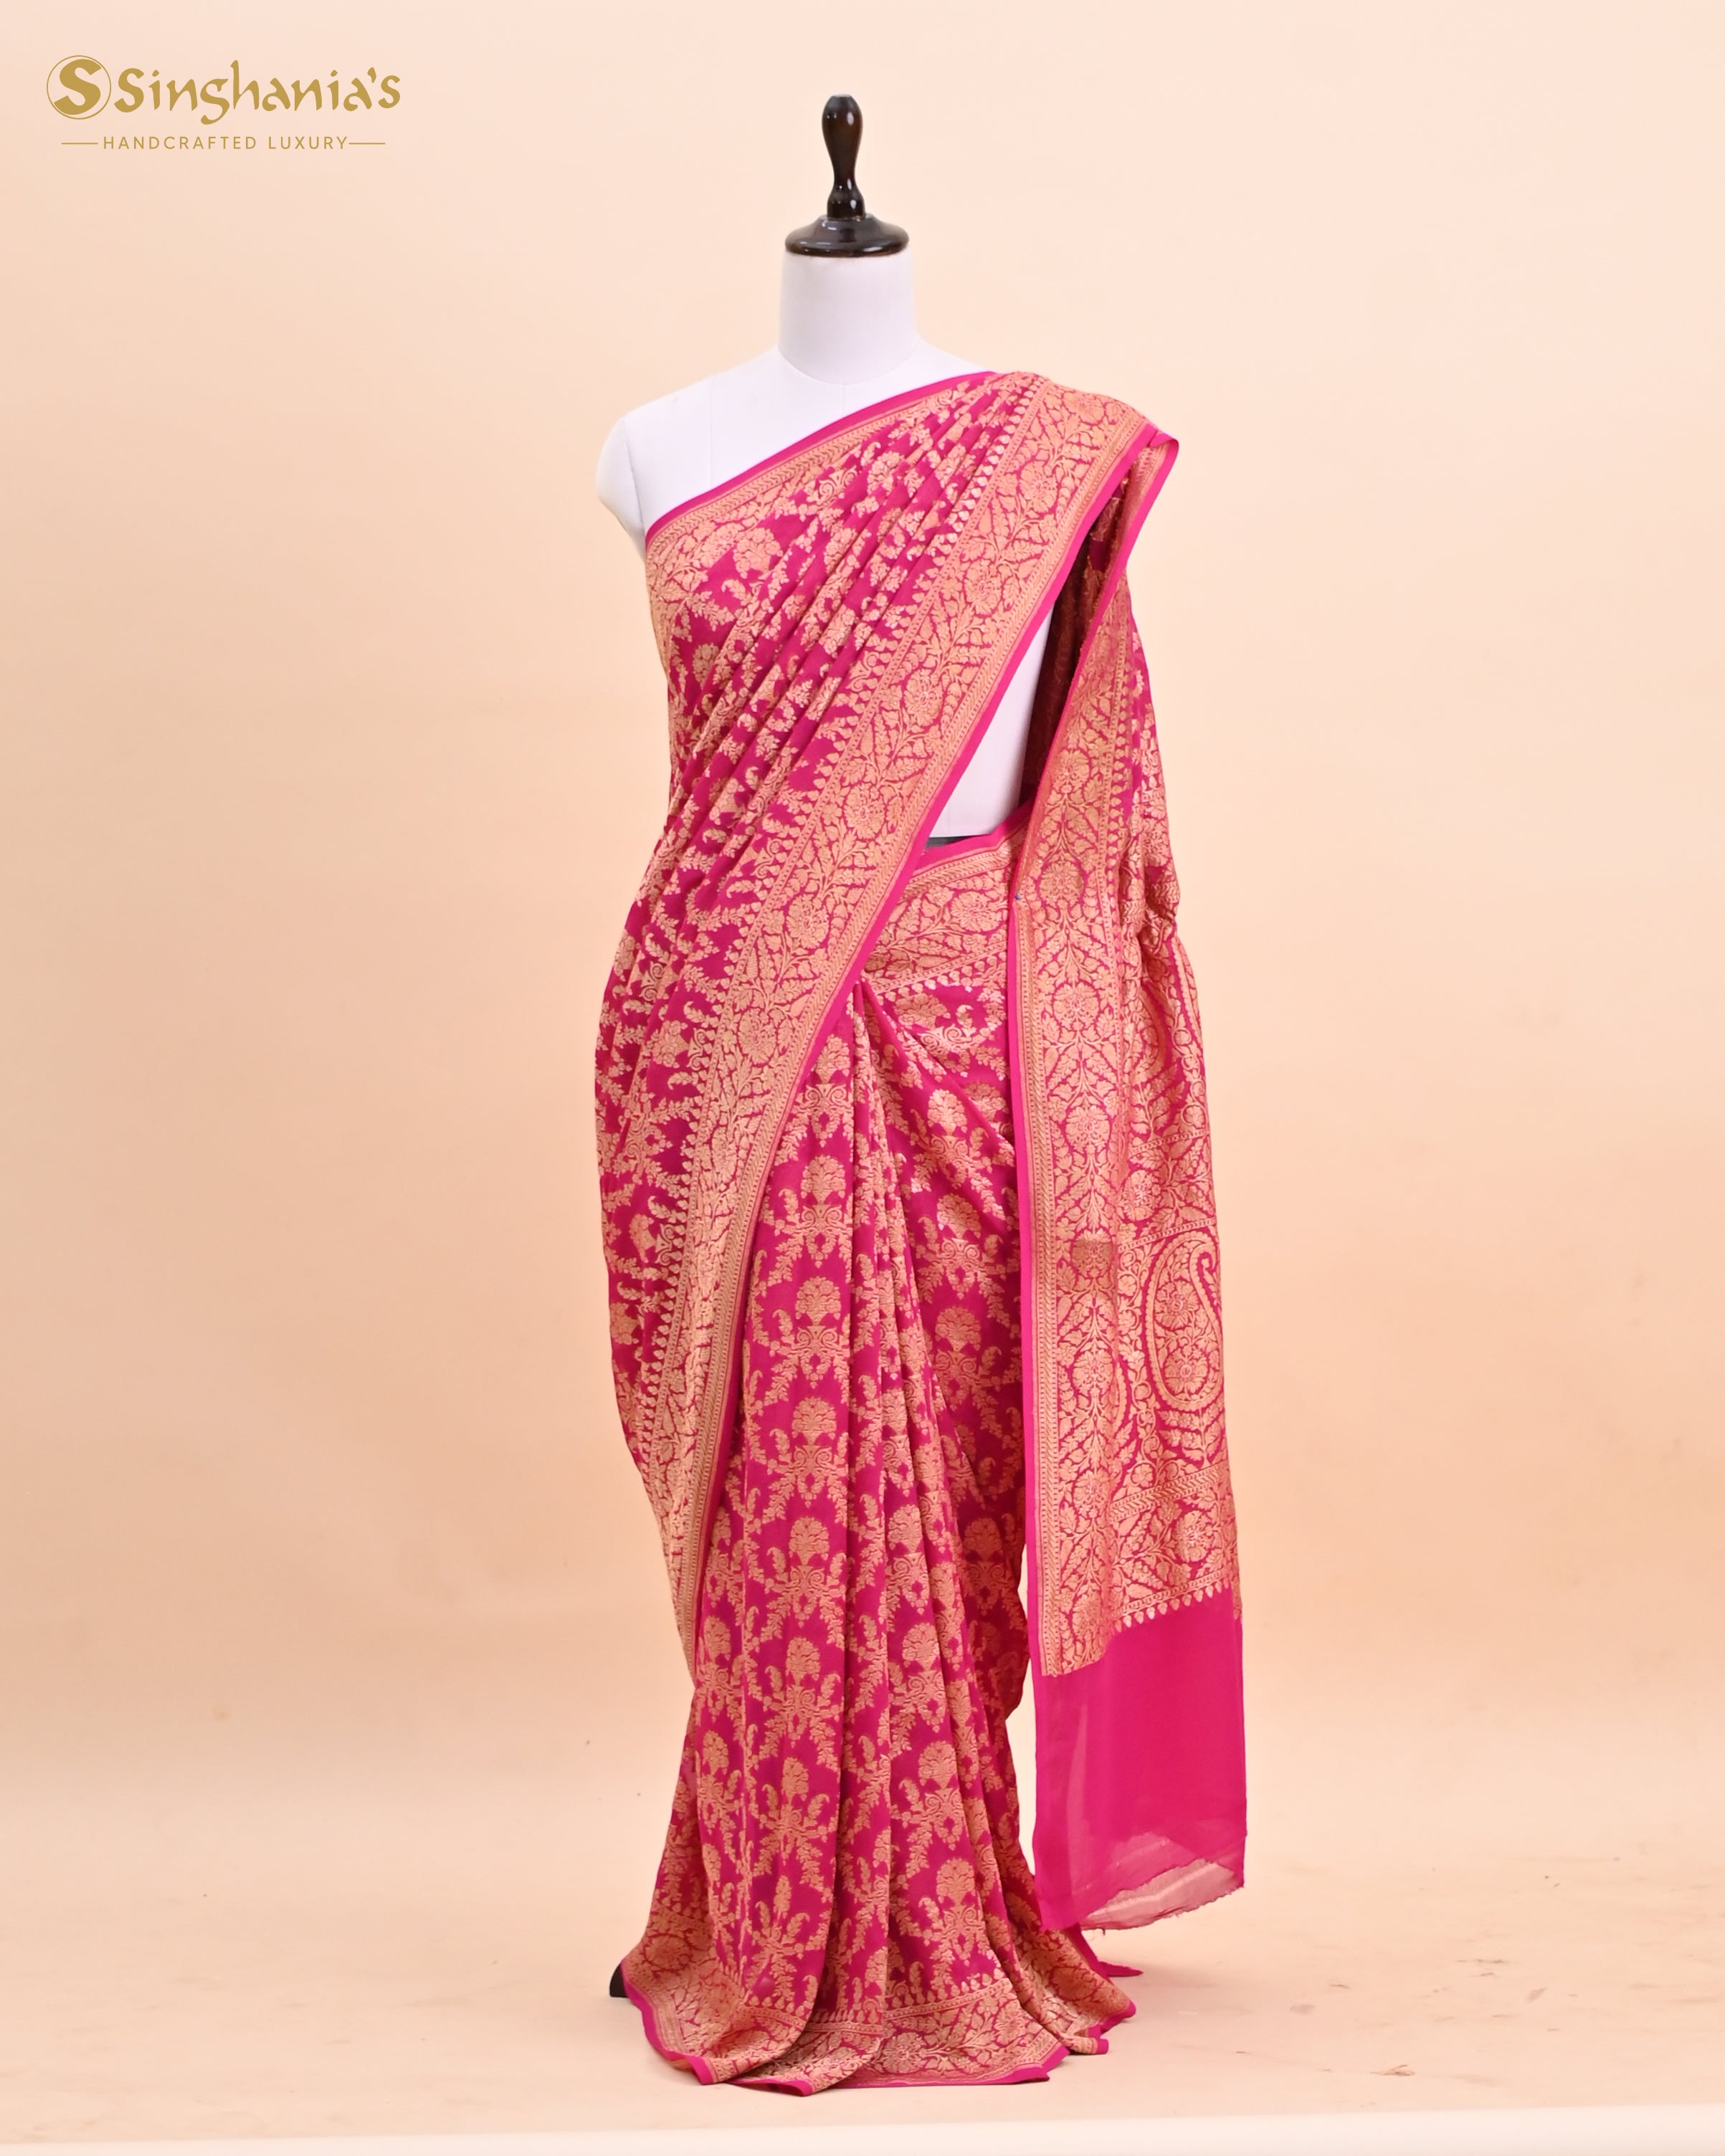 Saree draping tips – Parinita Sarees and Fashion